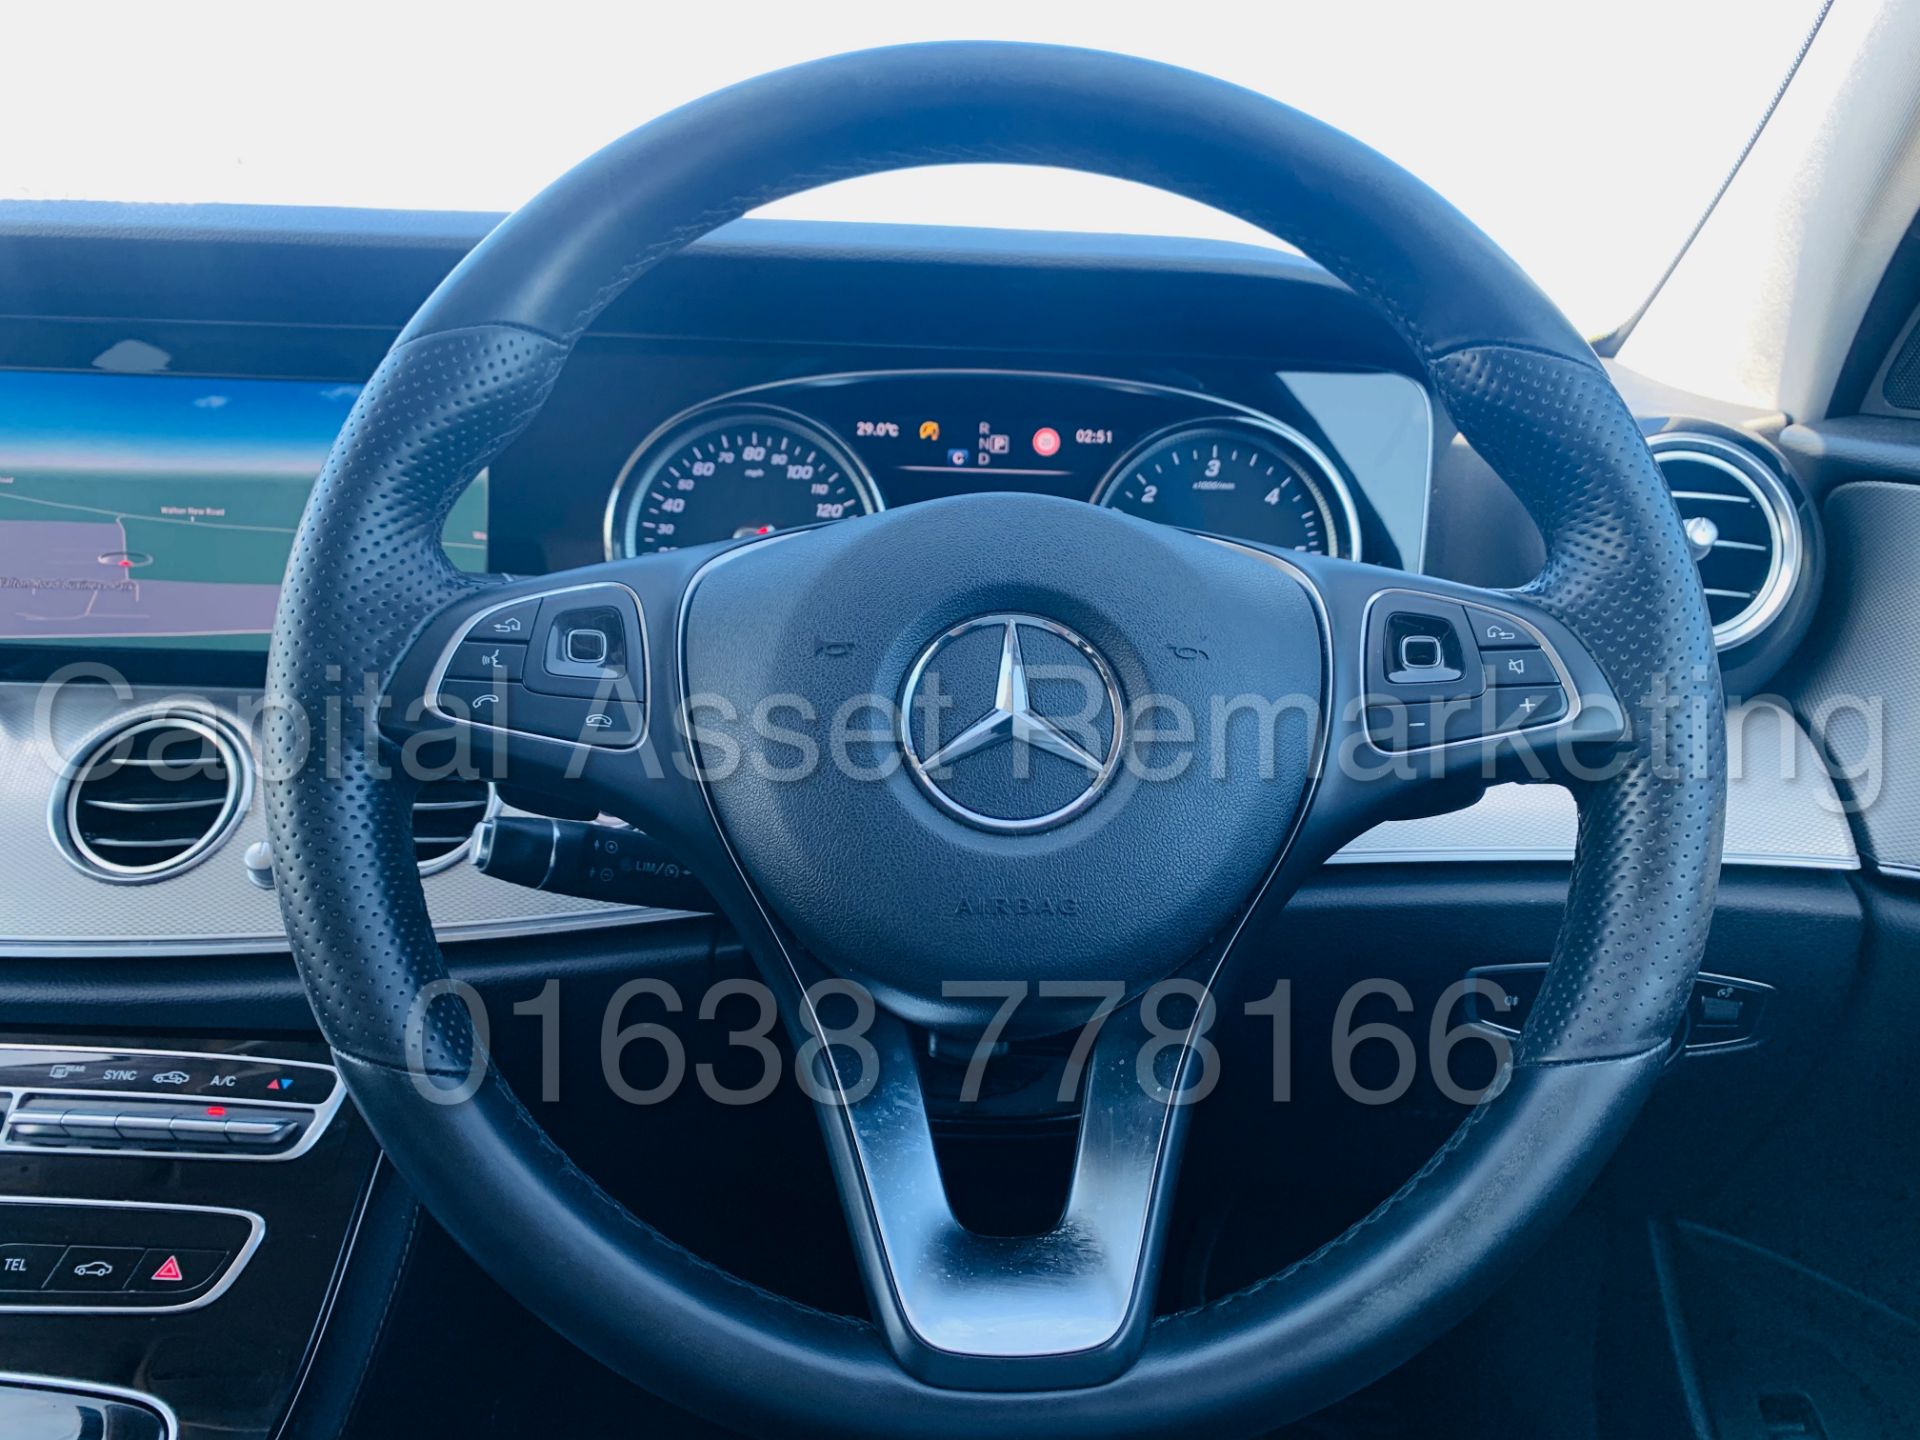 (On Sale) MERCEDES-BENZ E220D *5 DOOR - ESTATE CAR* (2017) '9-G TRONIC AUTO - LEATHER - SAT NAV' - Image 51 of 53